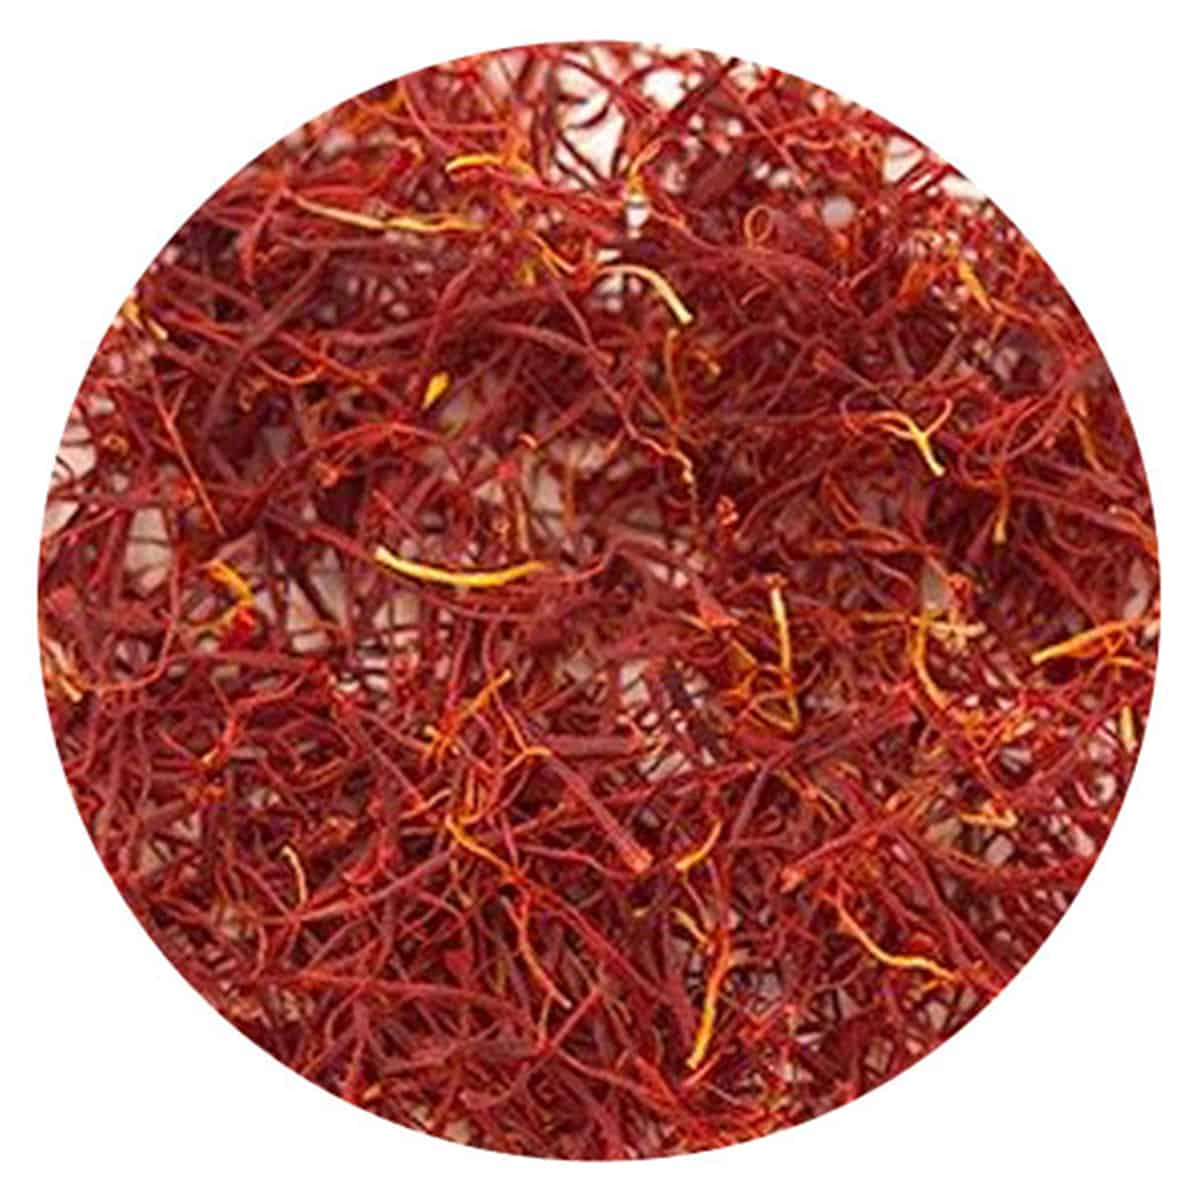 Buy IAG Foods Saffron Threads (Kesar) - 1 gm